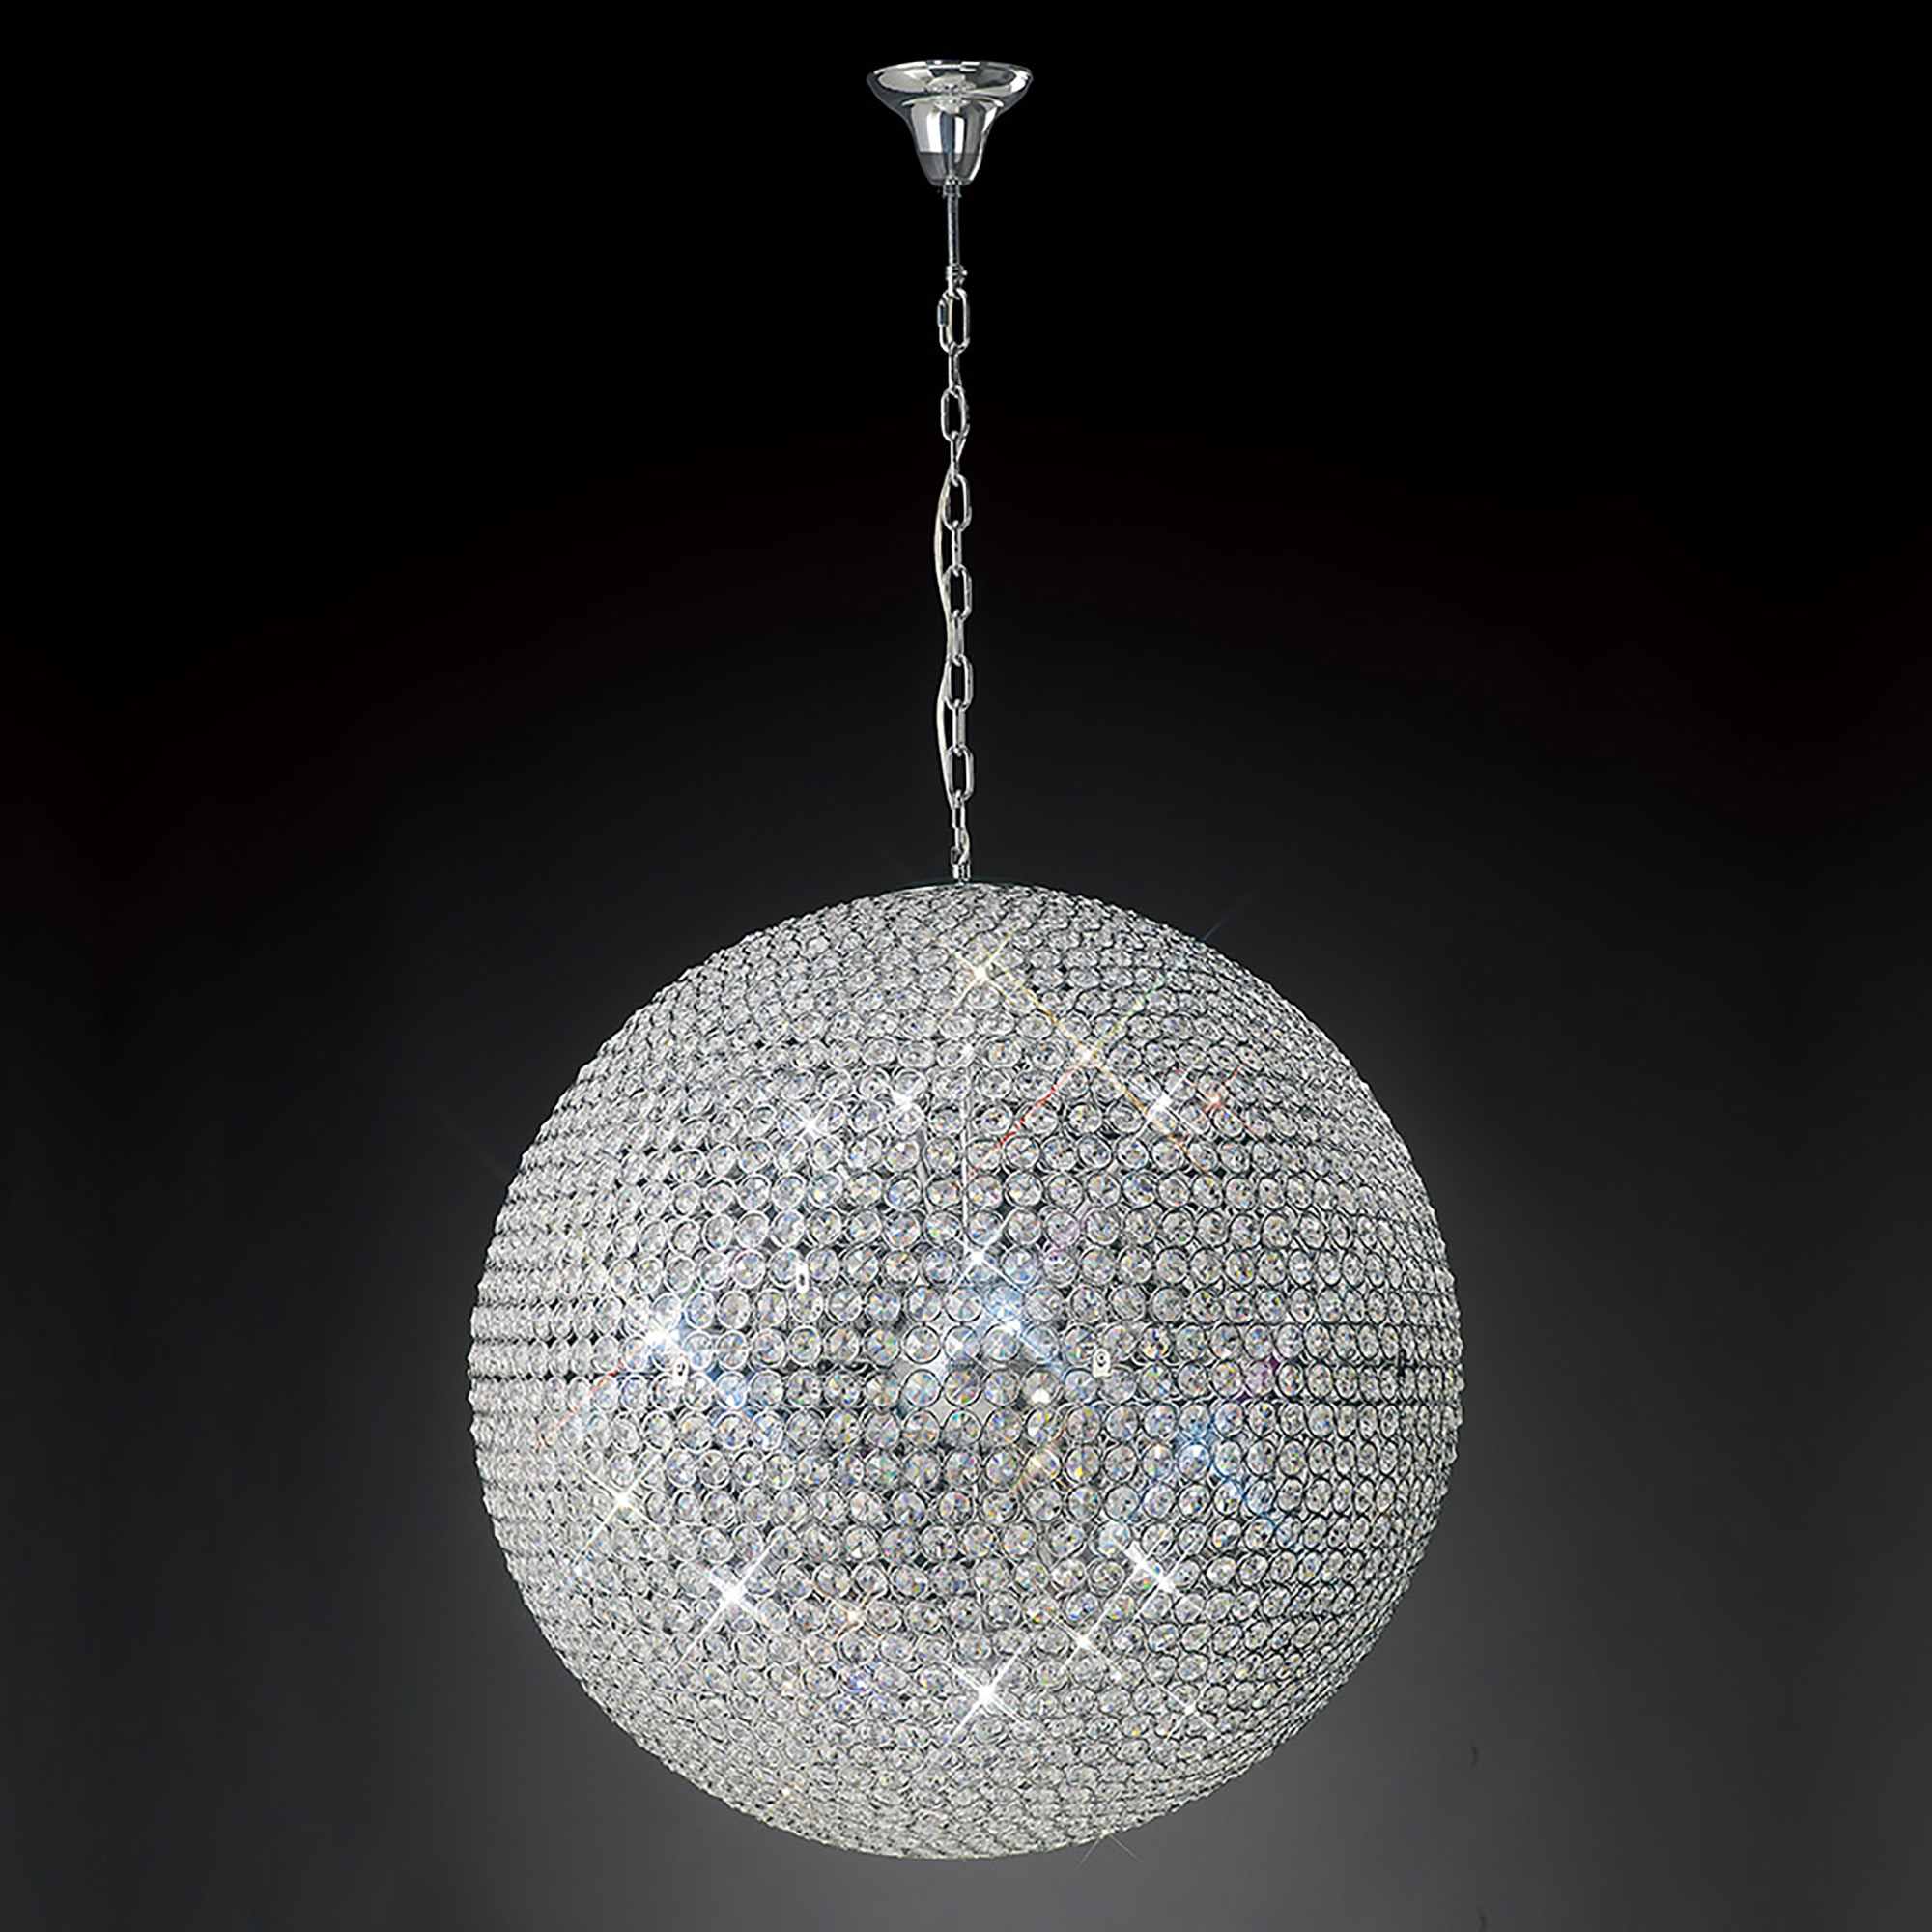 Ava Polished Chrome Crystal Ceiling Lights Diyas Spherical Crystal Fittings